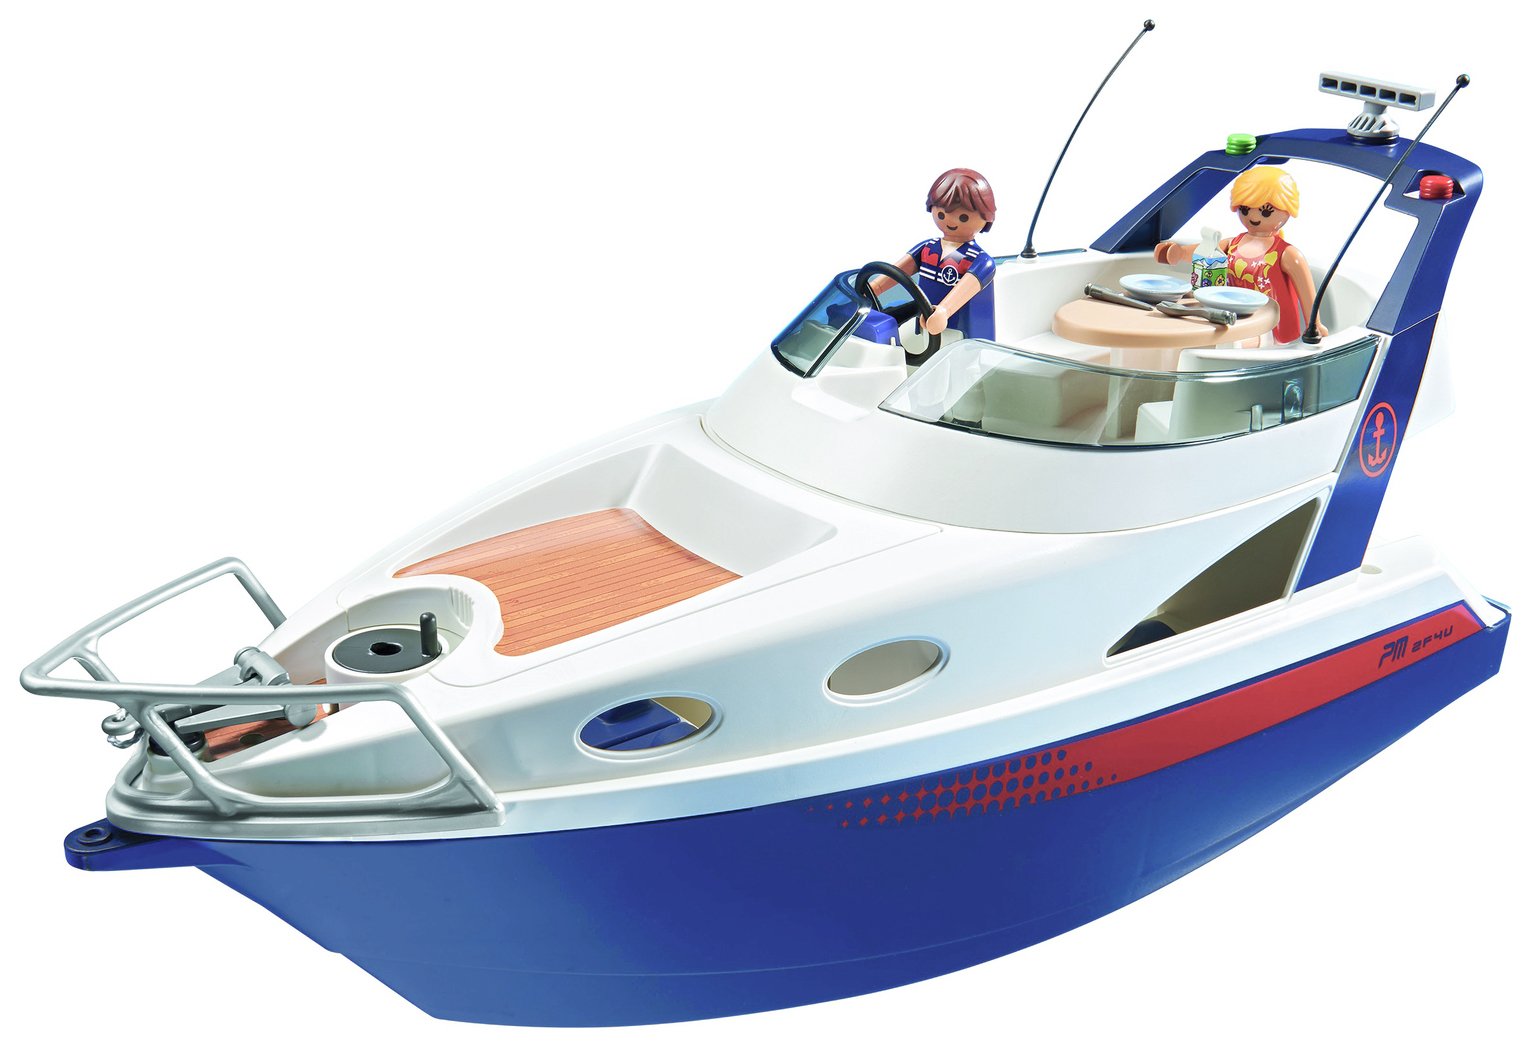 yacht playmobil 5205